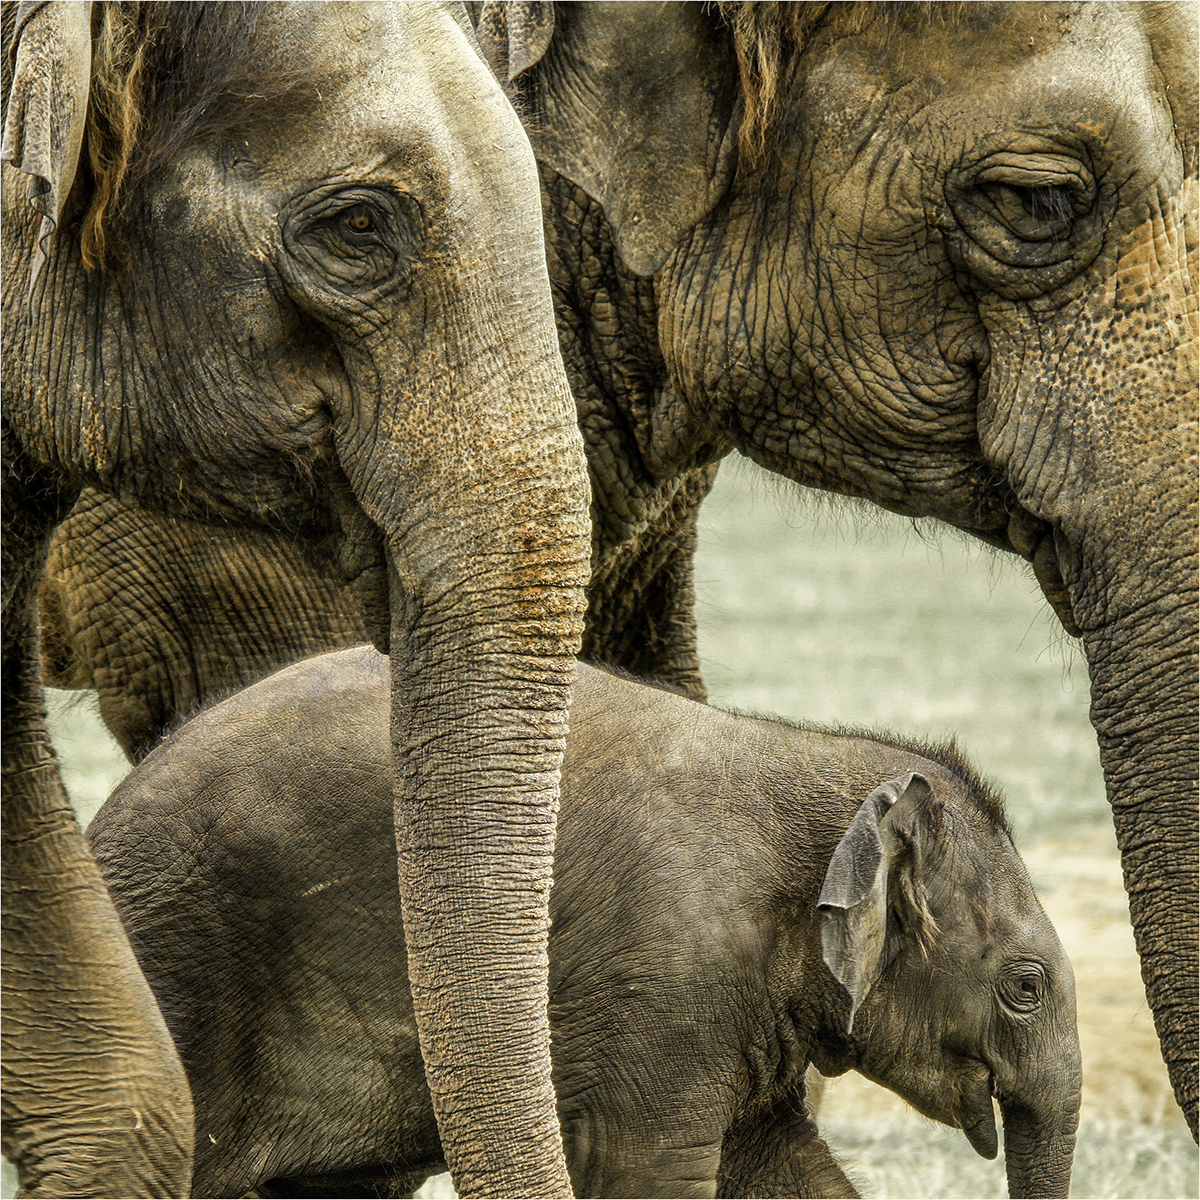 THE ELEPHANT FAMILY by Nigel Stewart